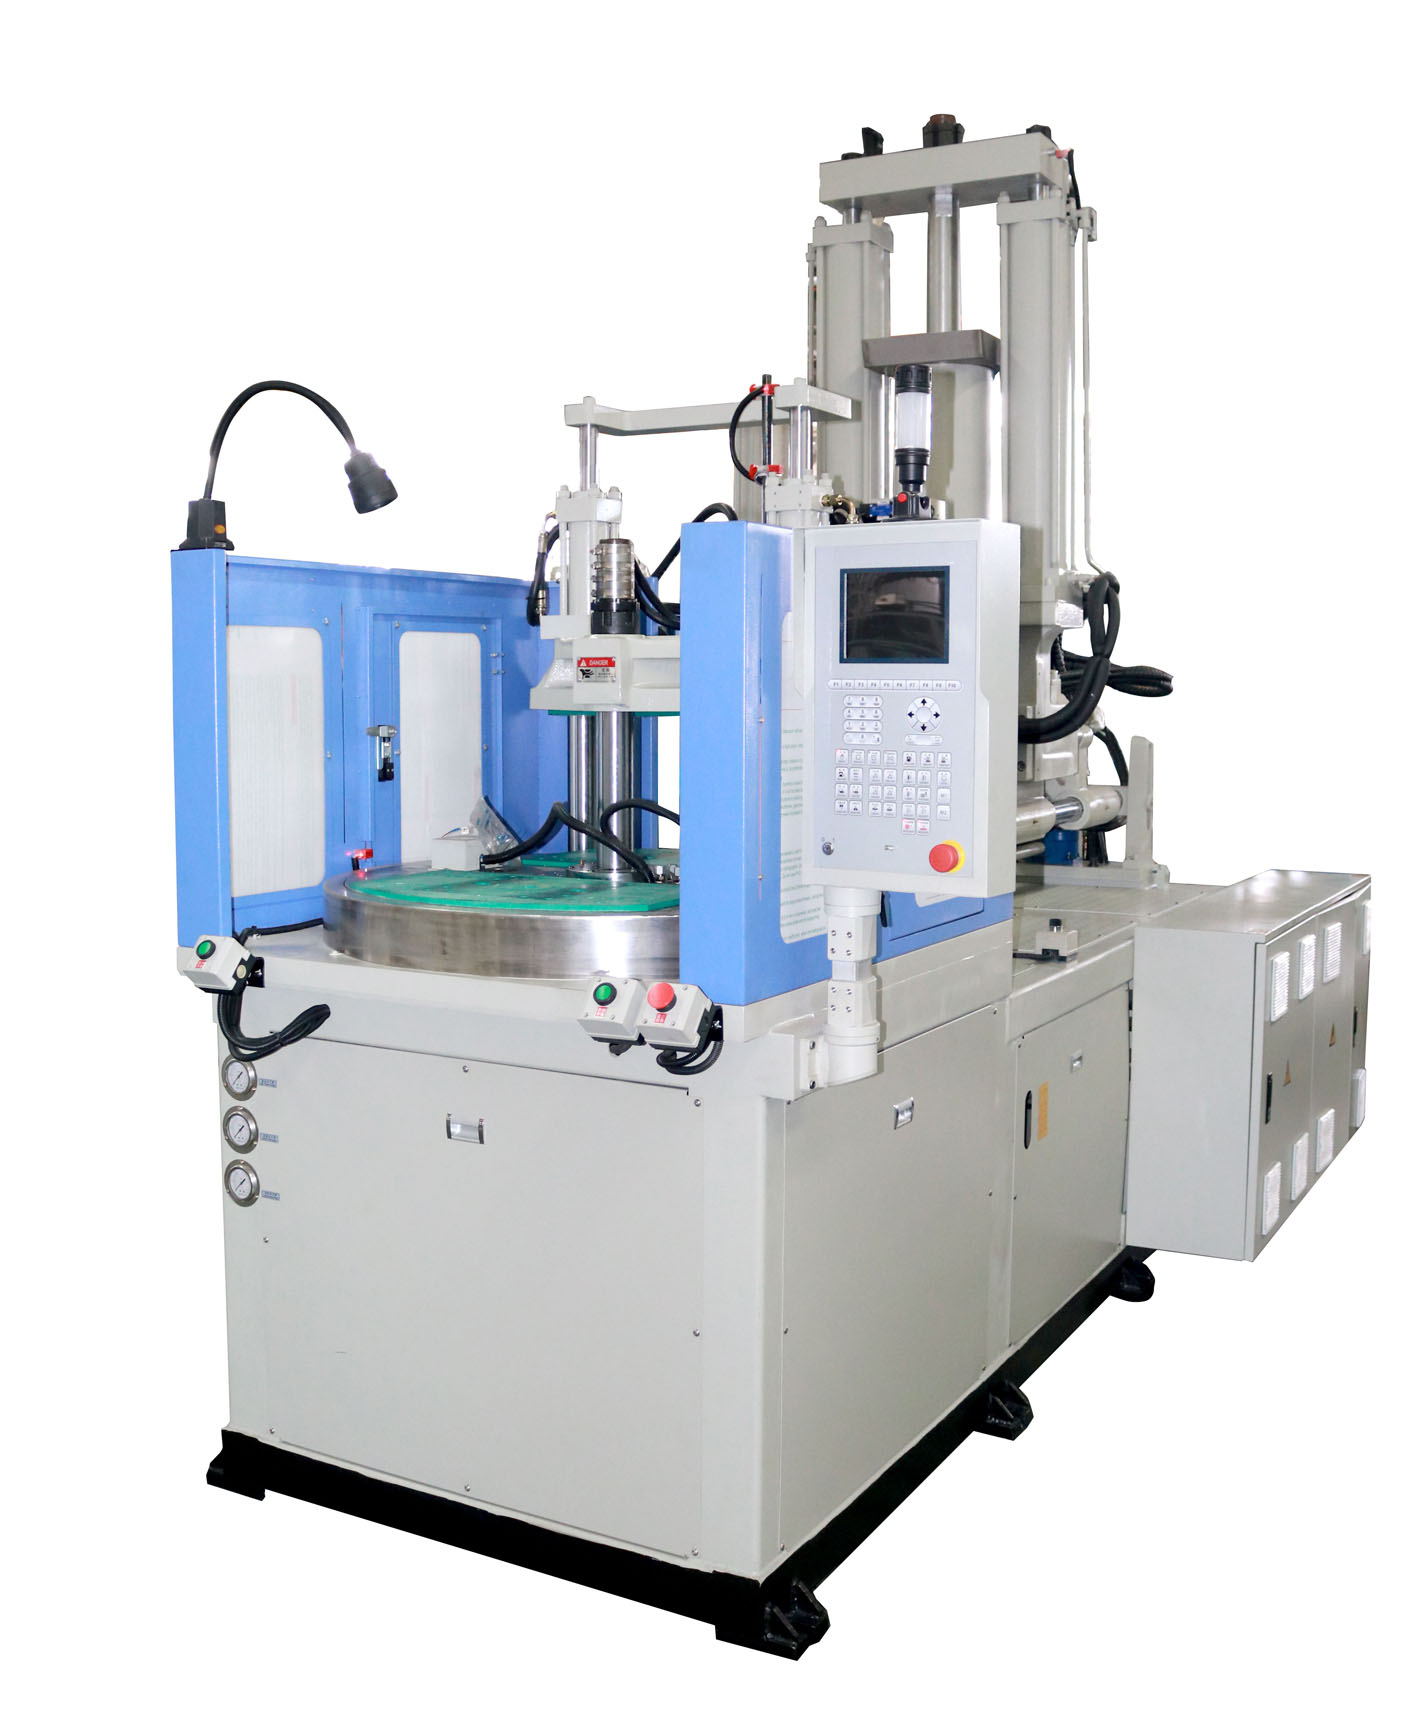 TK-700.2R.BMC vertical injection molding machine